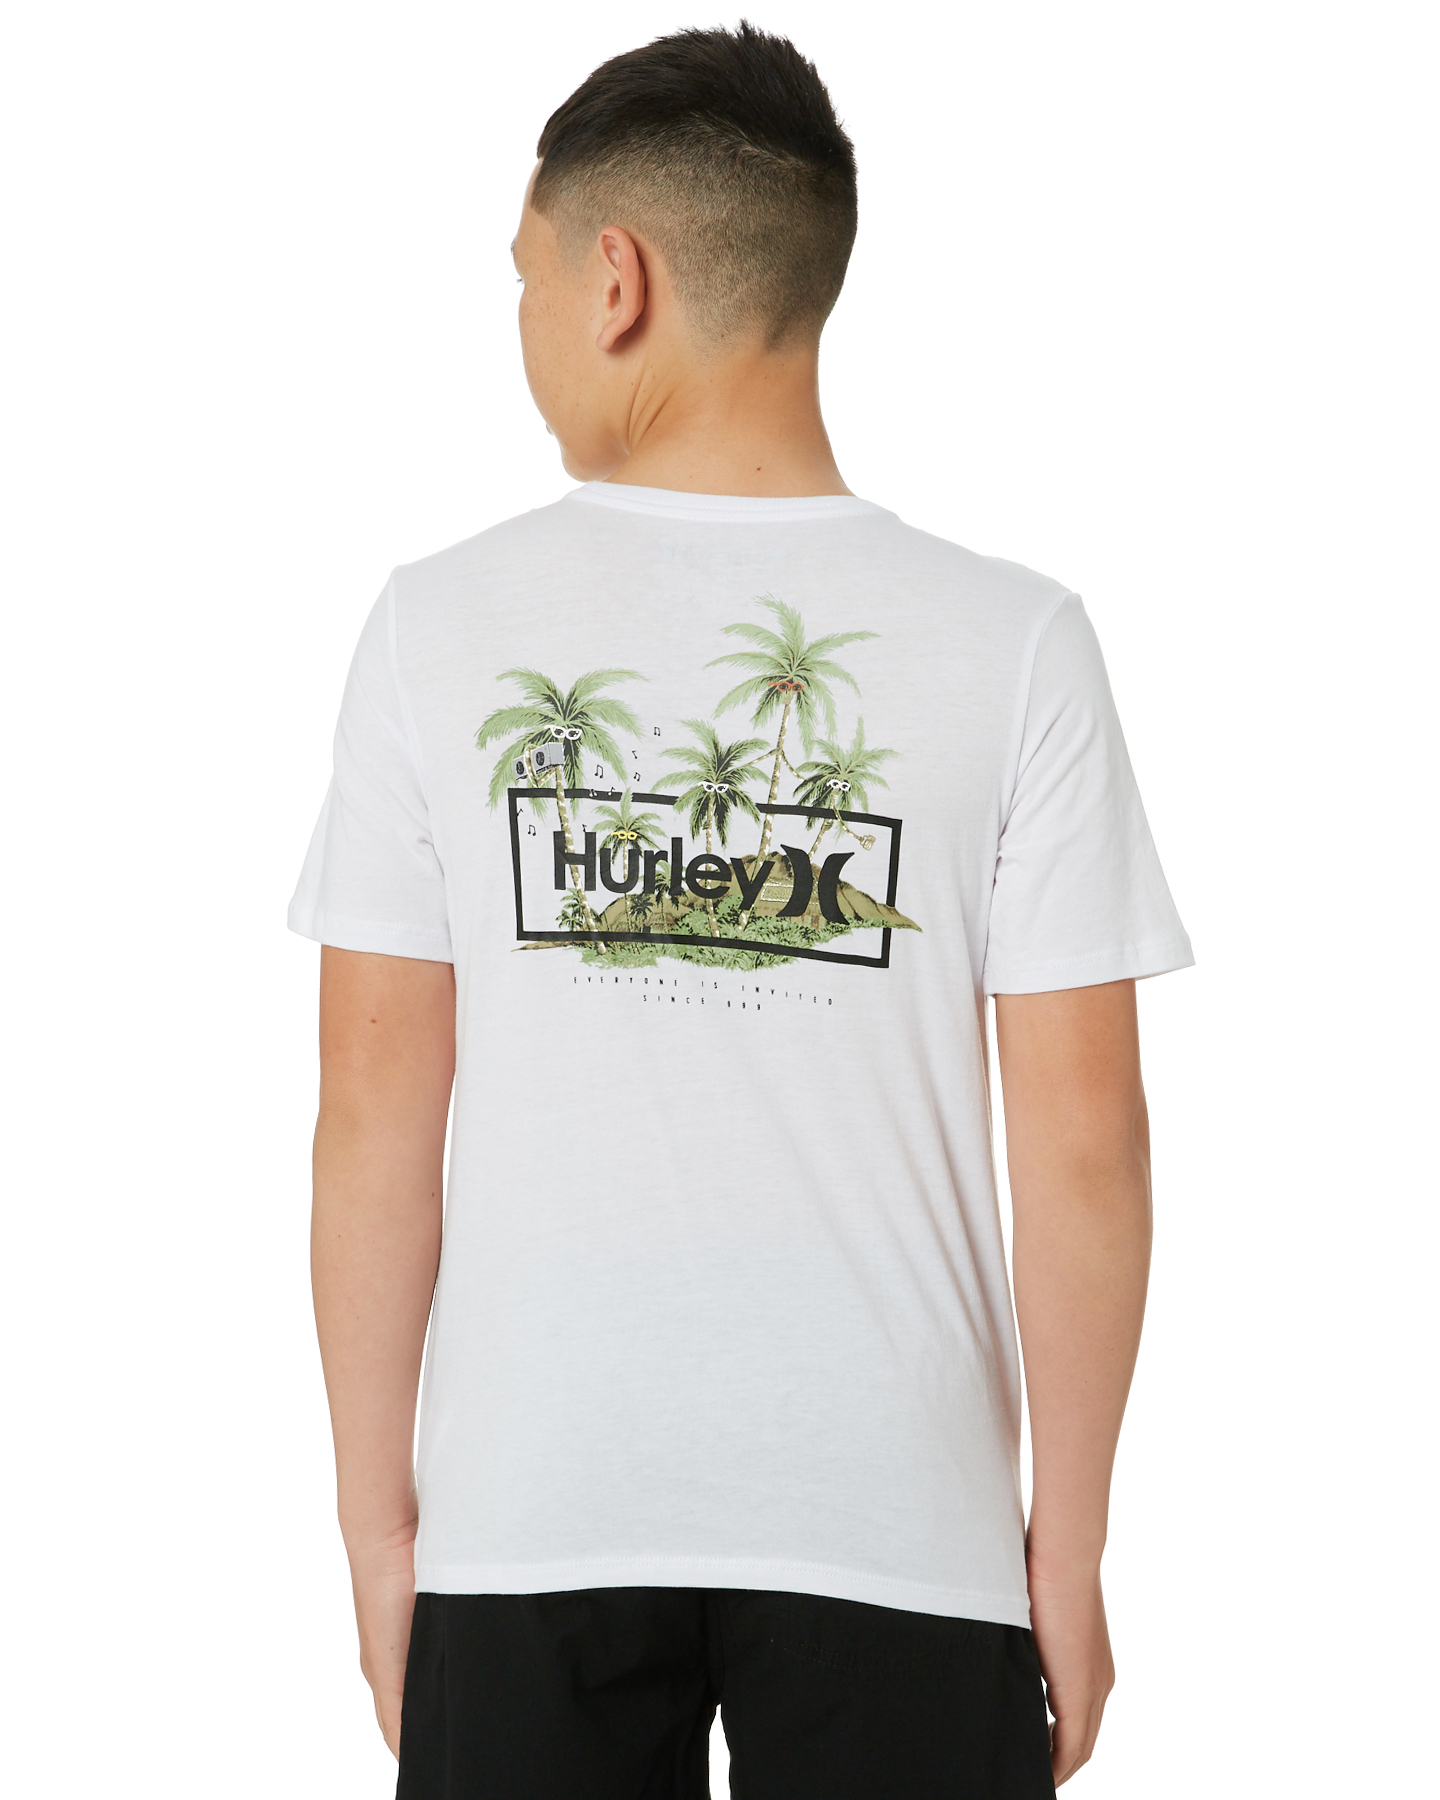 Hurley Boys Premium Chillaxing T-Shirt - Teens - White | SurfStitch